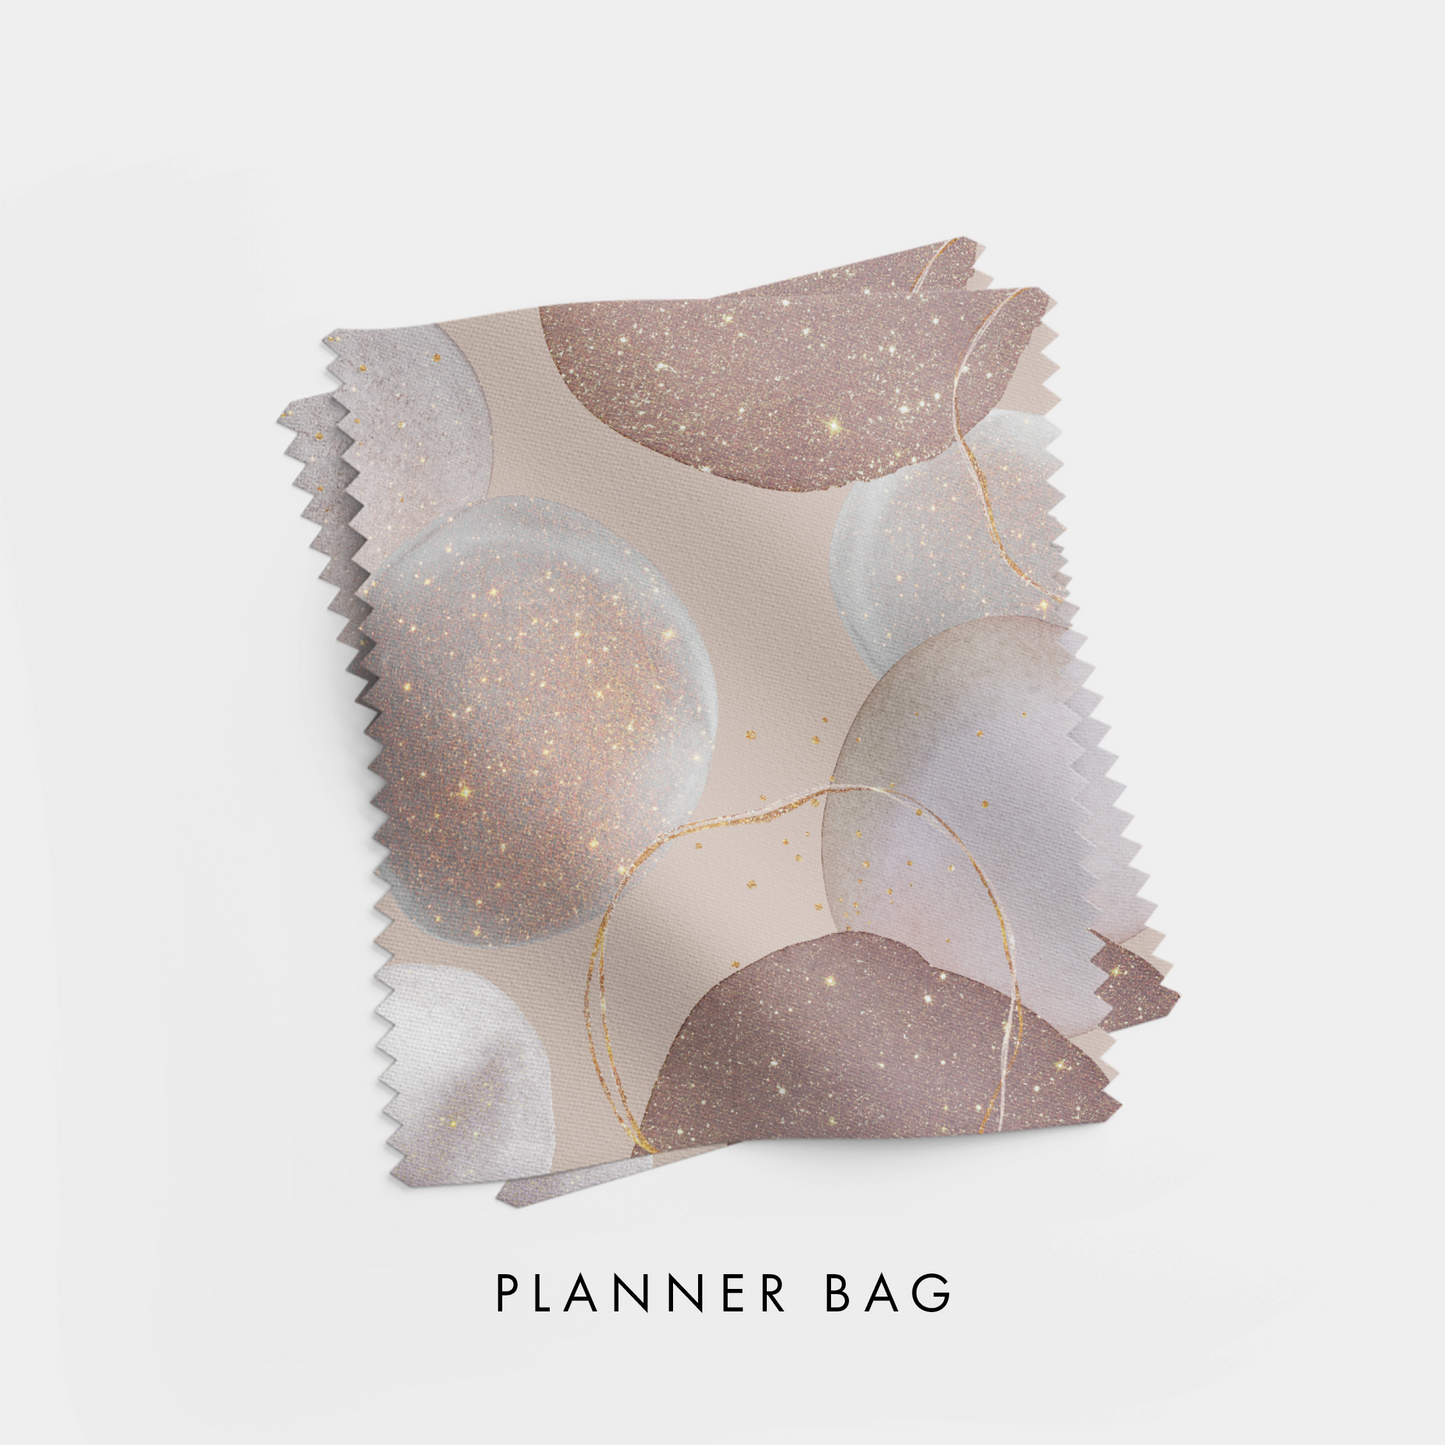 Planner Bags